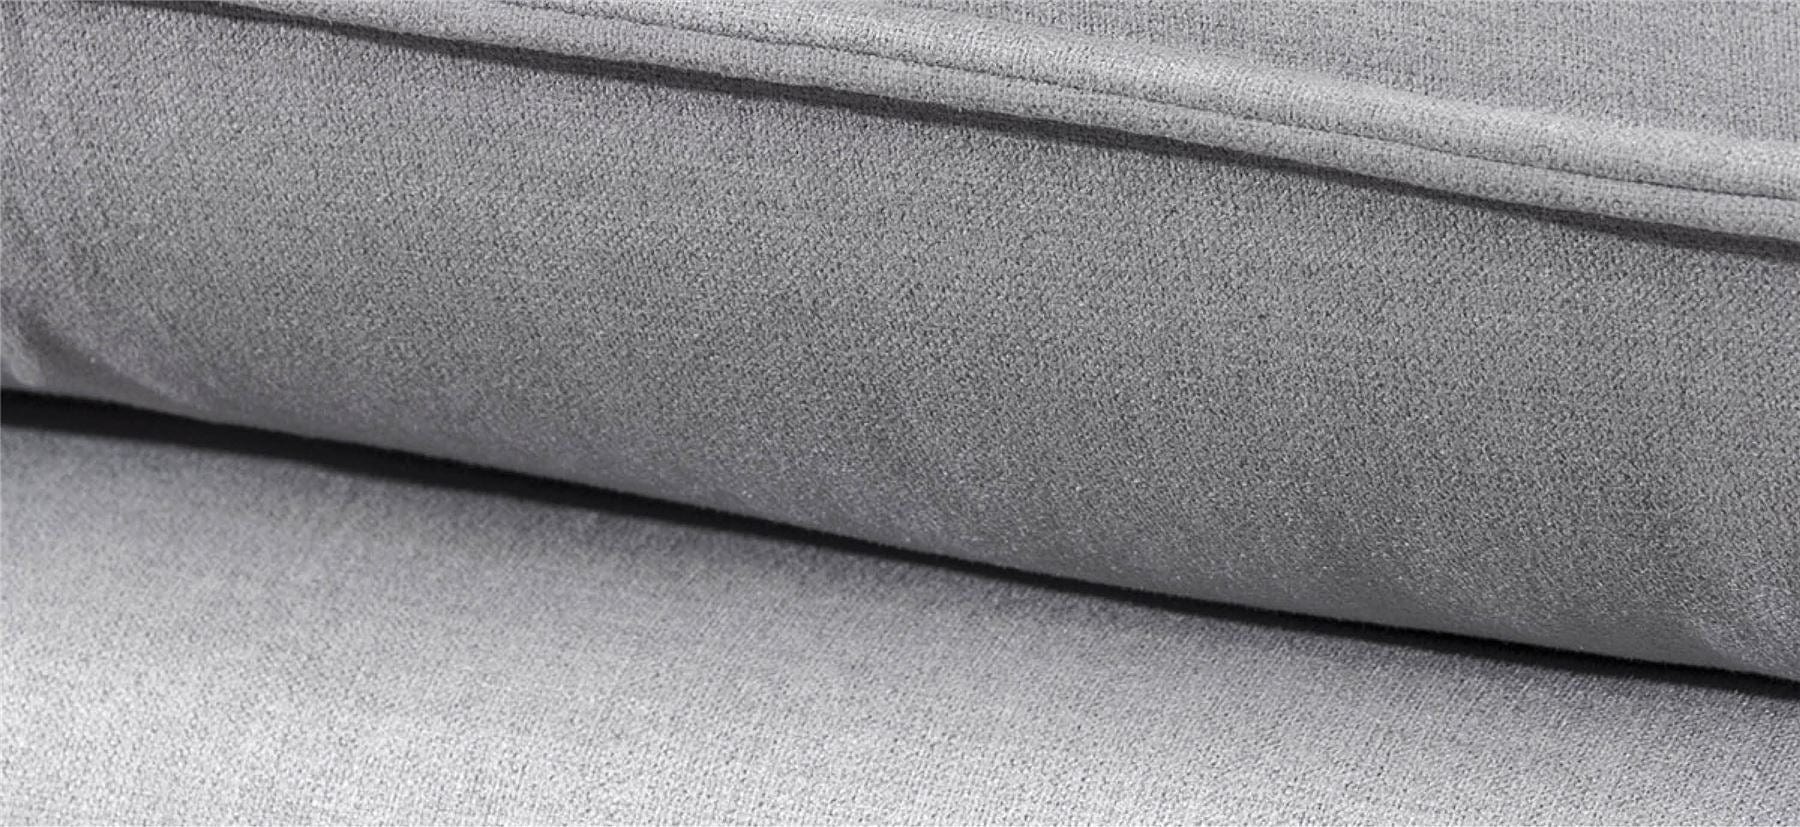 Quatropi Rachel Huge Modern U Shape Offset Modular Sofa Many Fabrics 3.3 x 2.55m